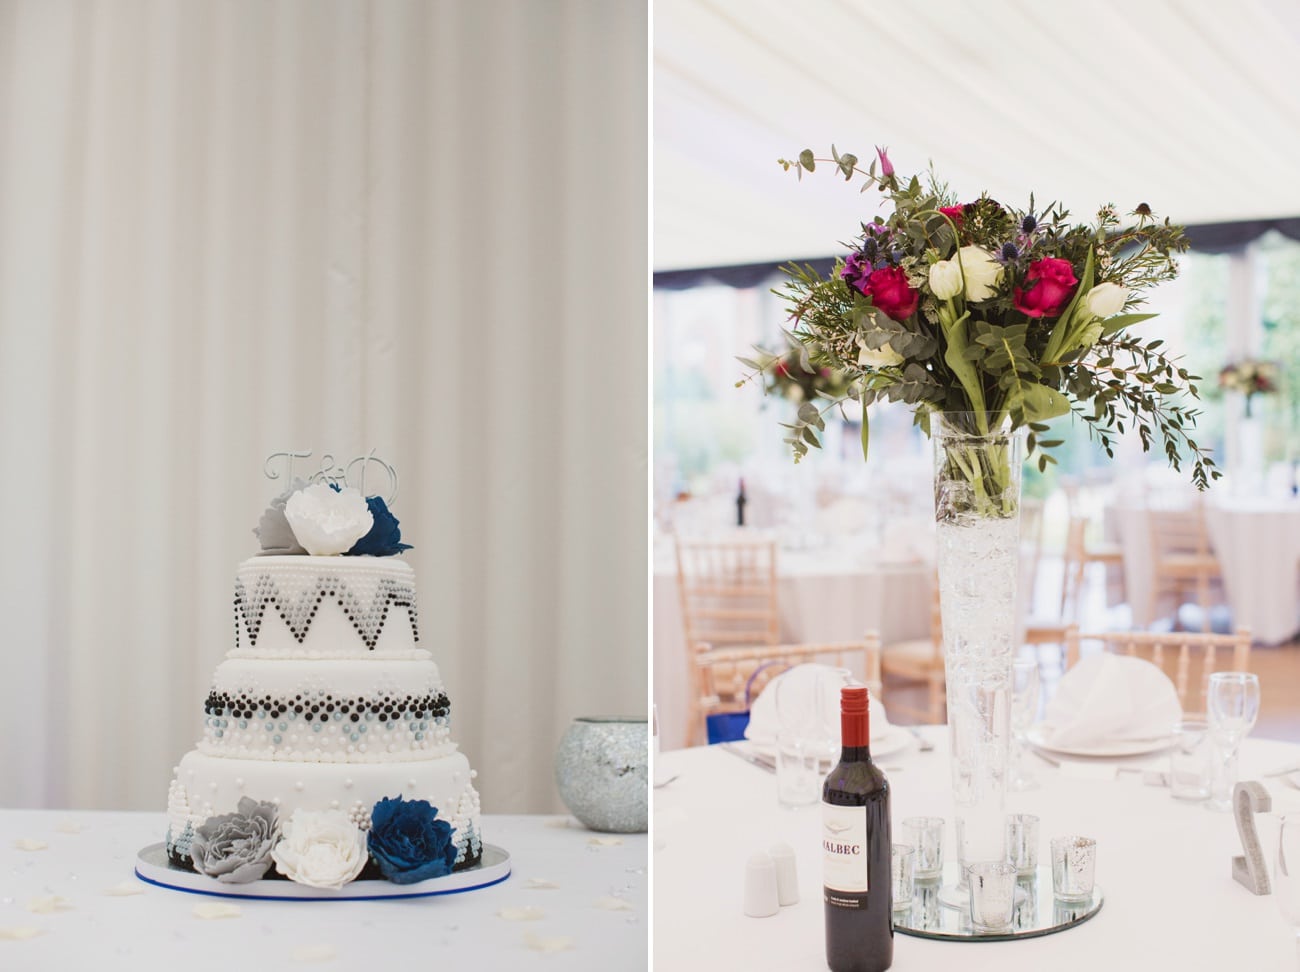 thursford garden pavilion norfolk wedding cake and table decorations